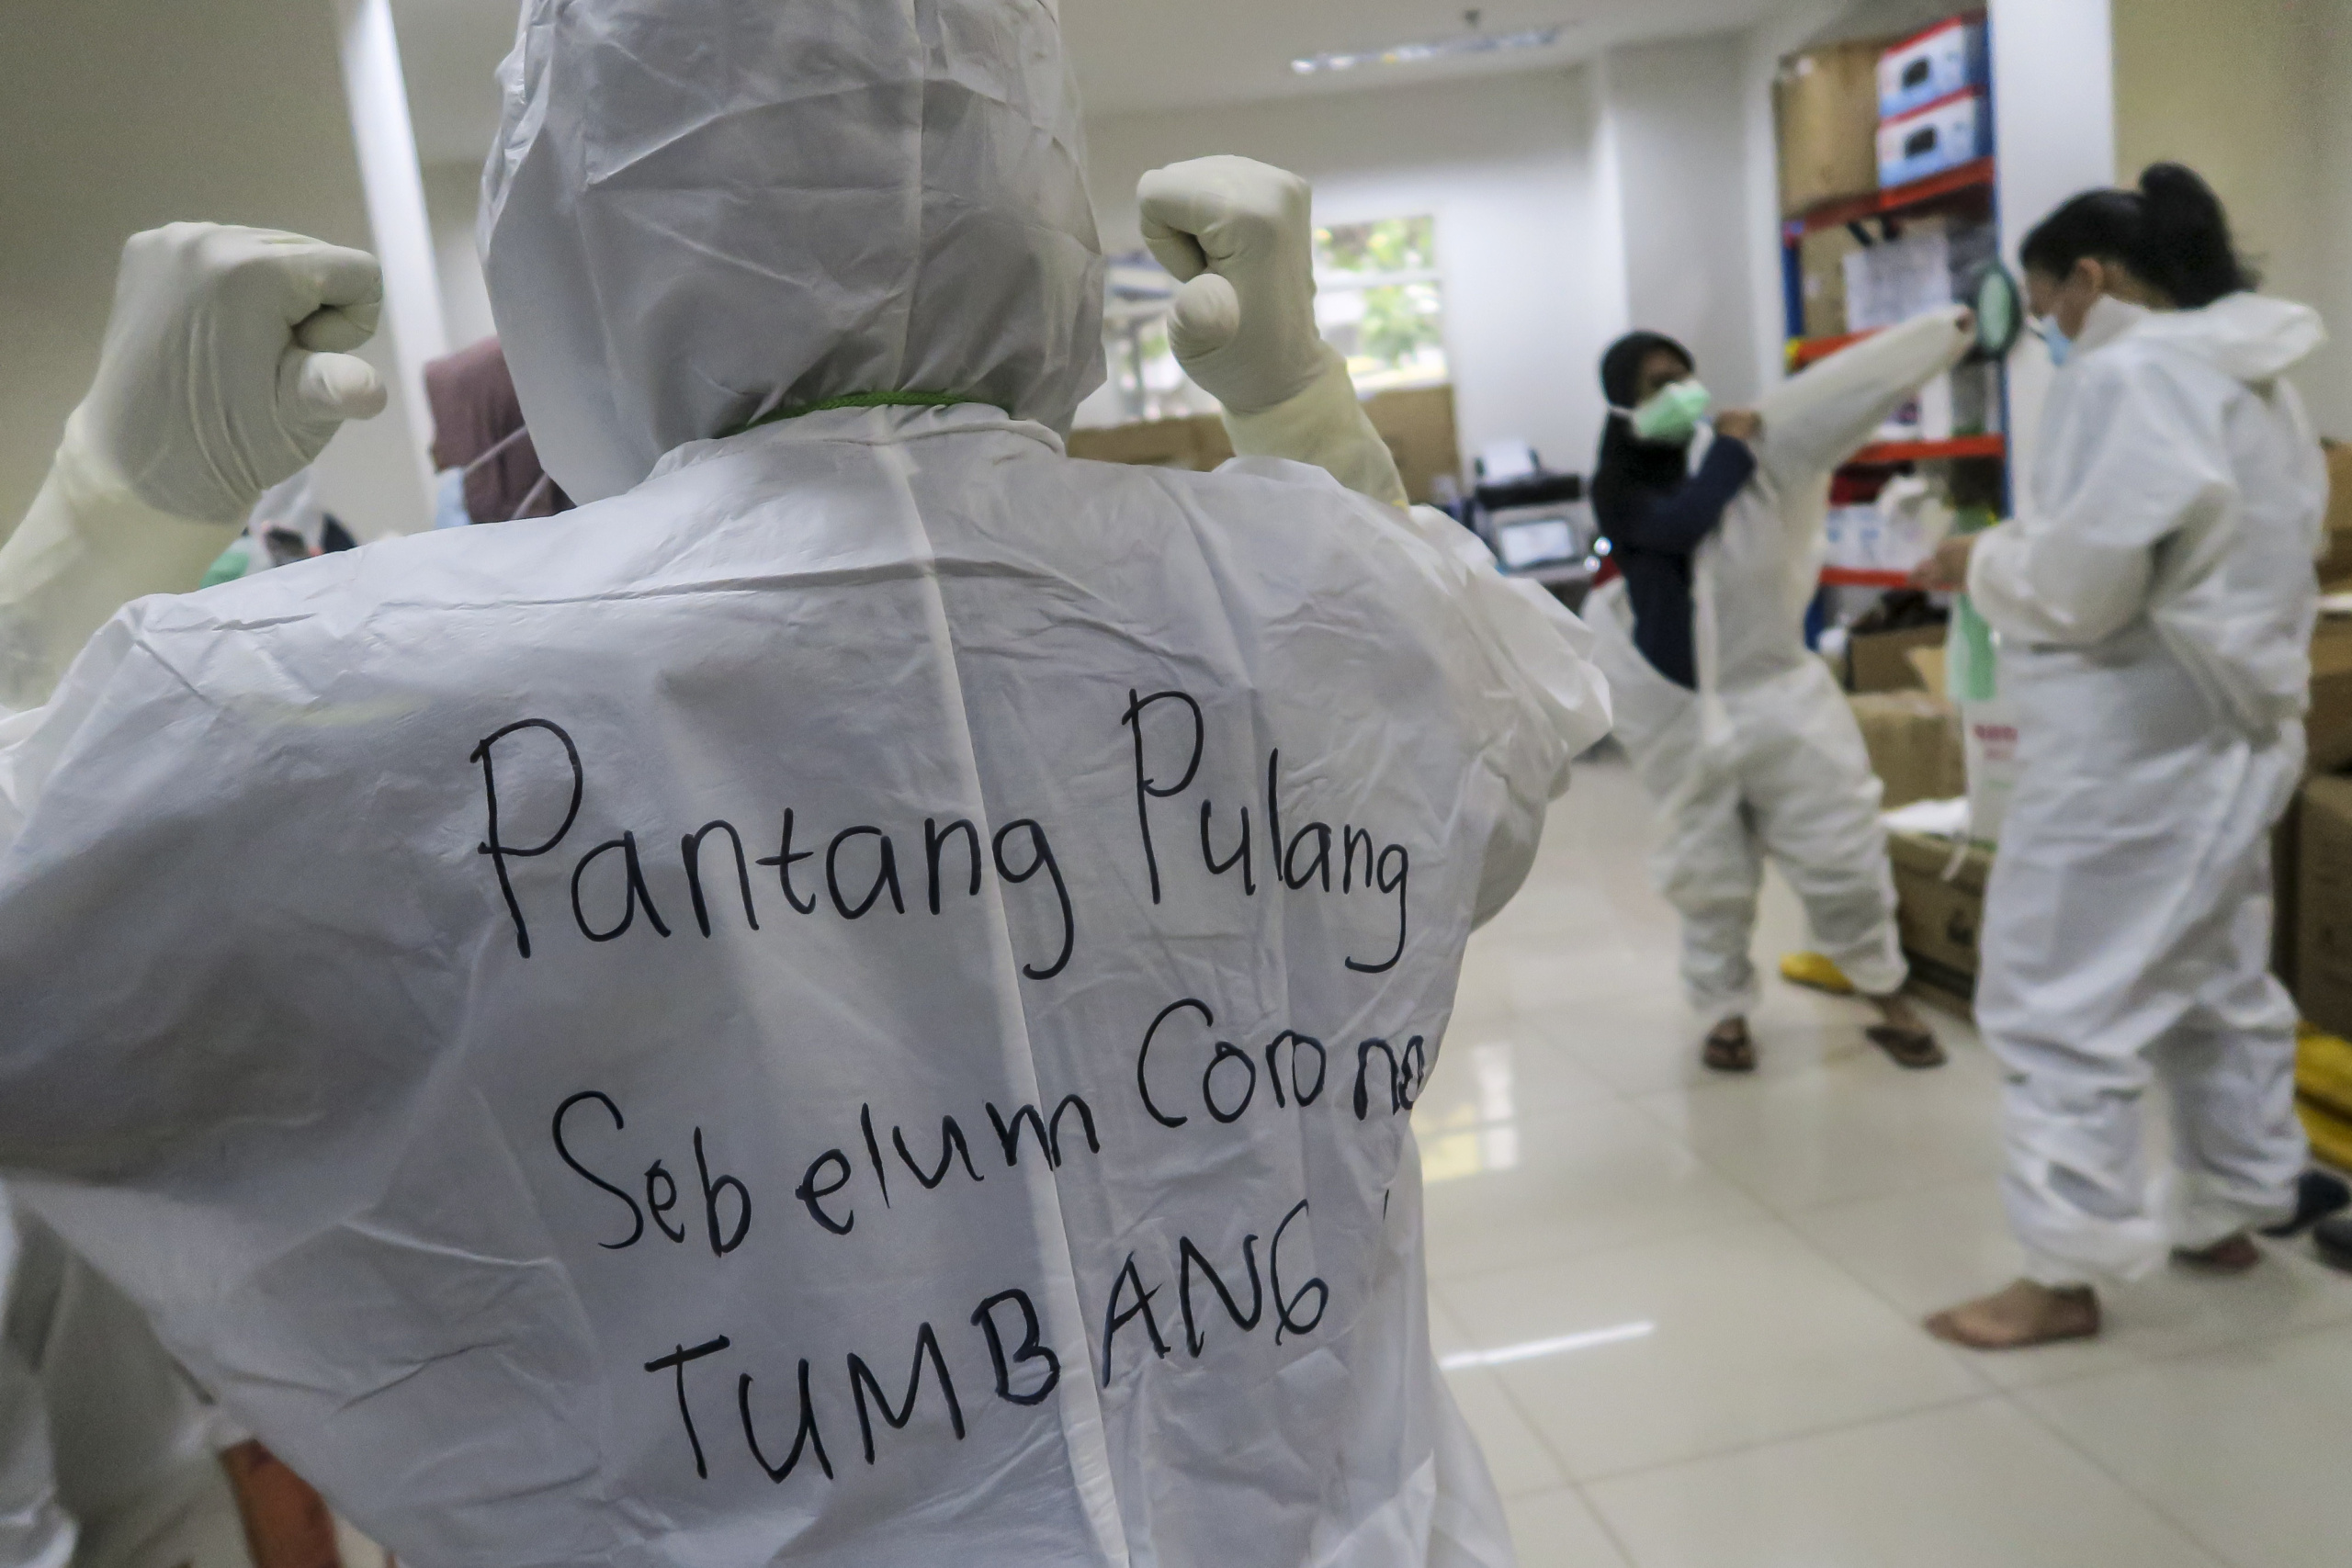 Photo Credit: Sebuah kalimat penyemangat tertulis di hazmat salah satu tenaga kesehatan di Rumah Sakit Darurat (RSD) Covid-19, Wisma Atlet Kemayoran, Jakarta. ANTARA/M Risyal Hidayat